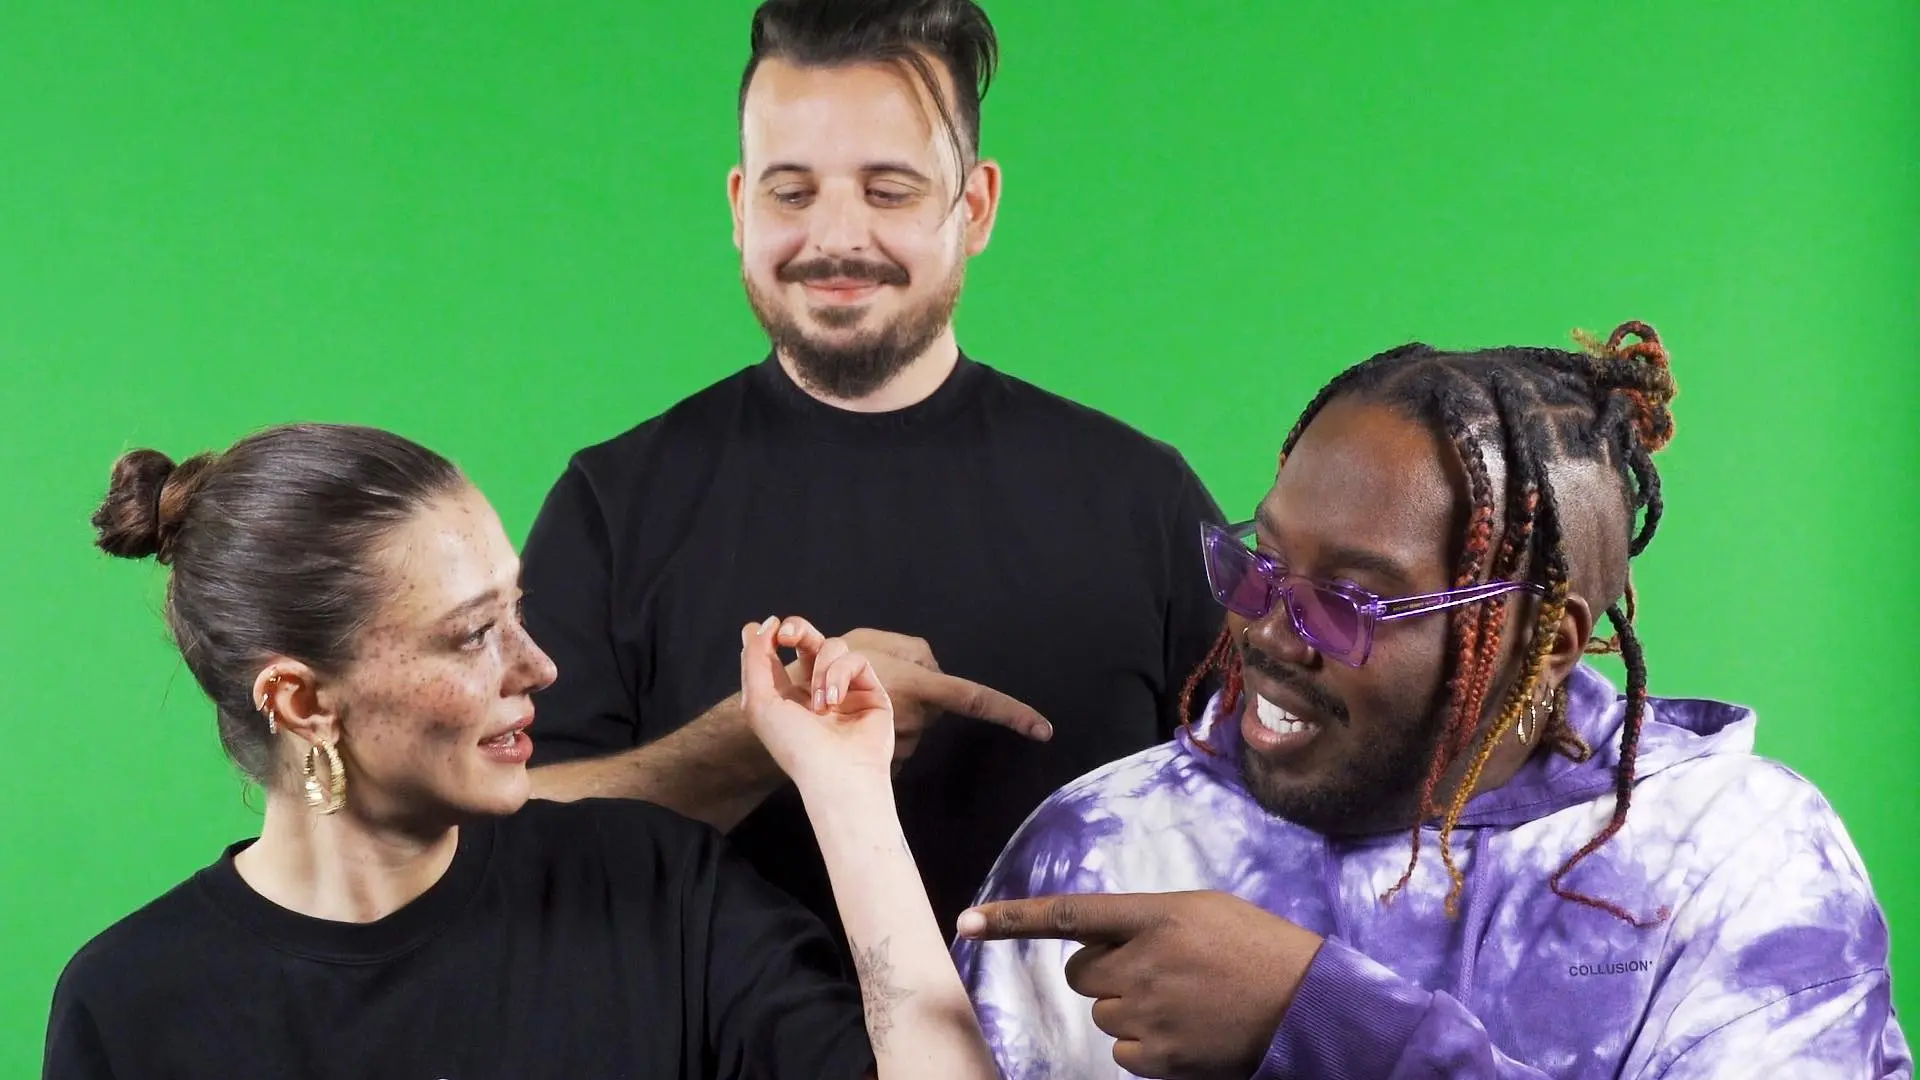 Vidéo : Only You avec Maeva Marshall, Adrien Cachot et Kiddy Smile